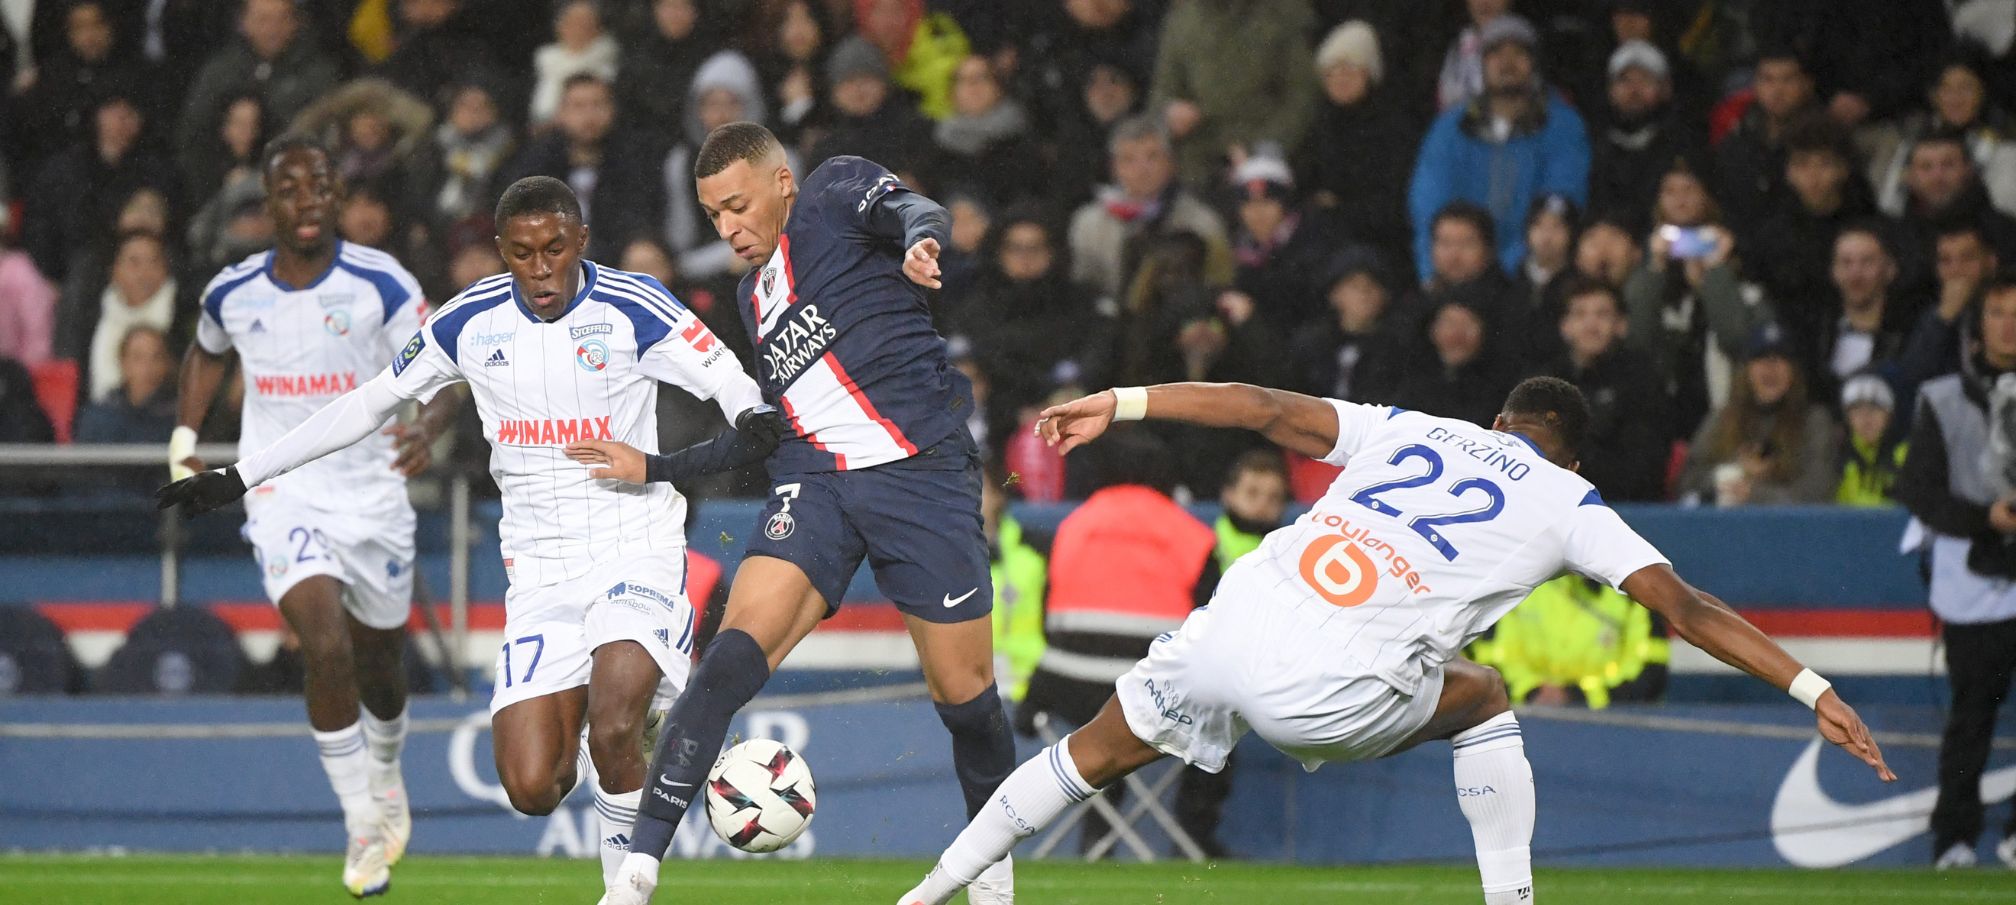 Strasbourg-PSG preview: Paris set to seal title